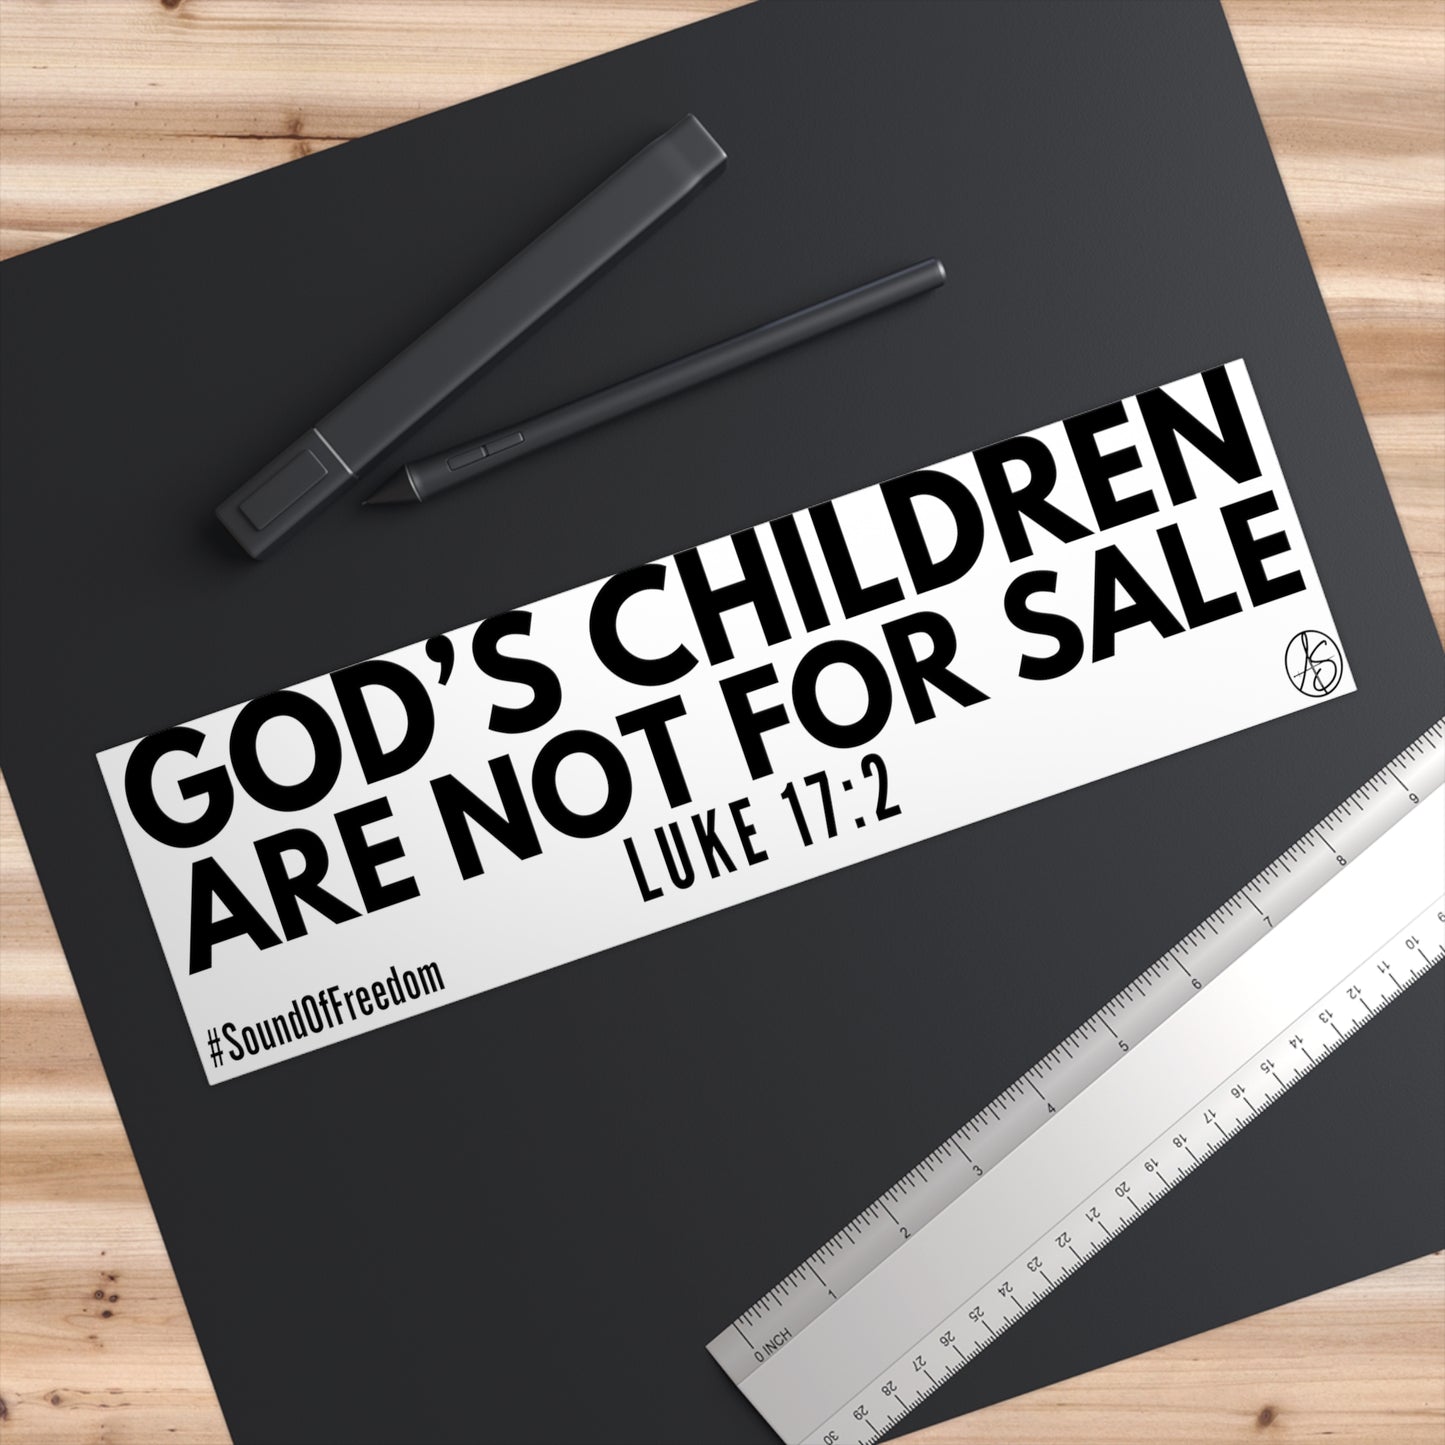 God’s Children Are Not For Sale Bumper Sticker